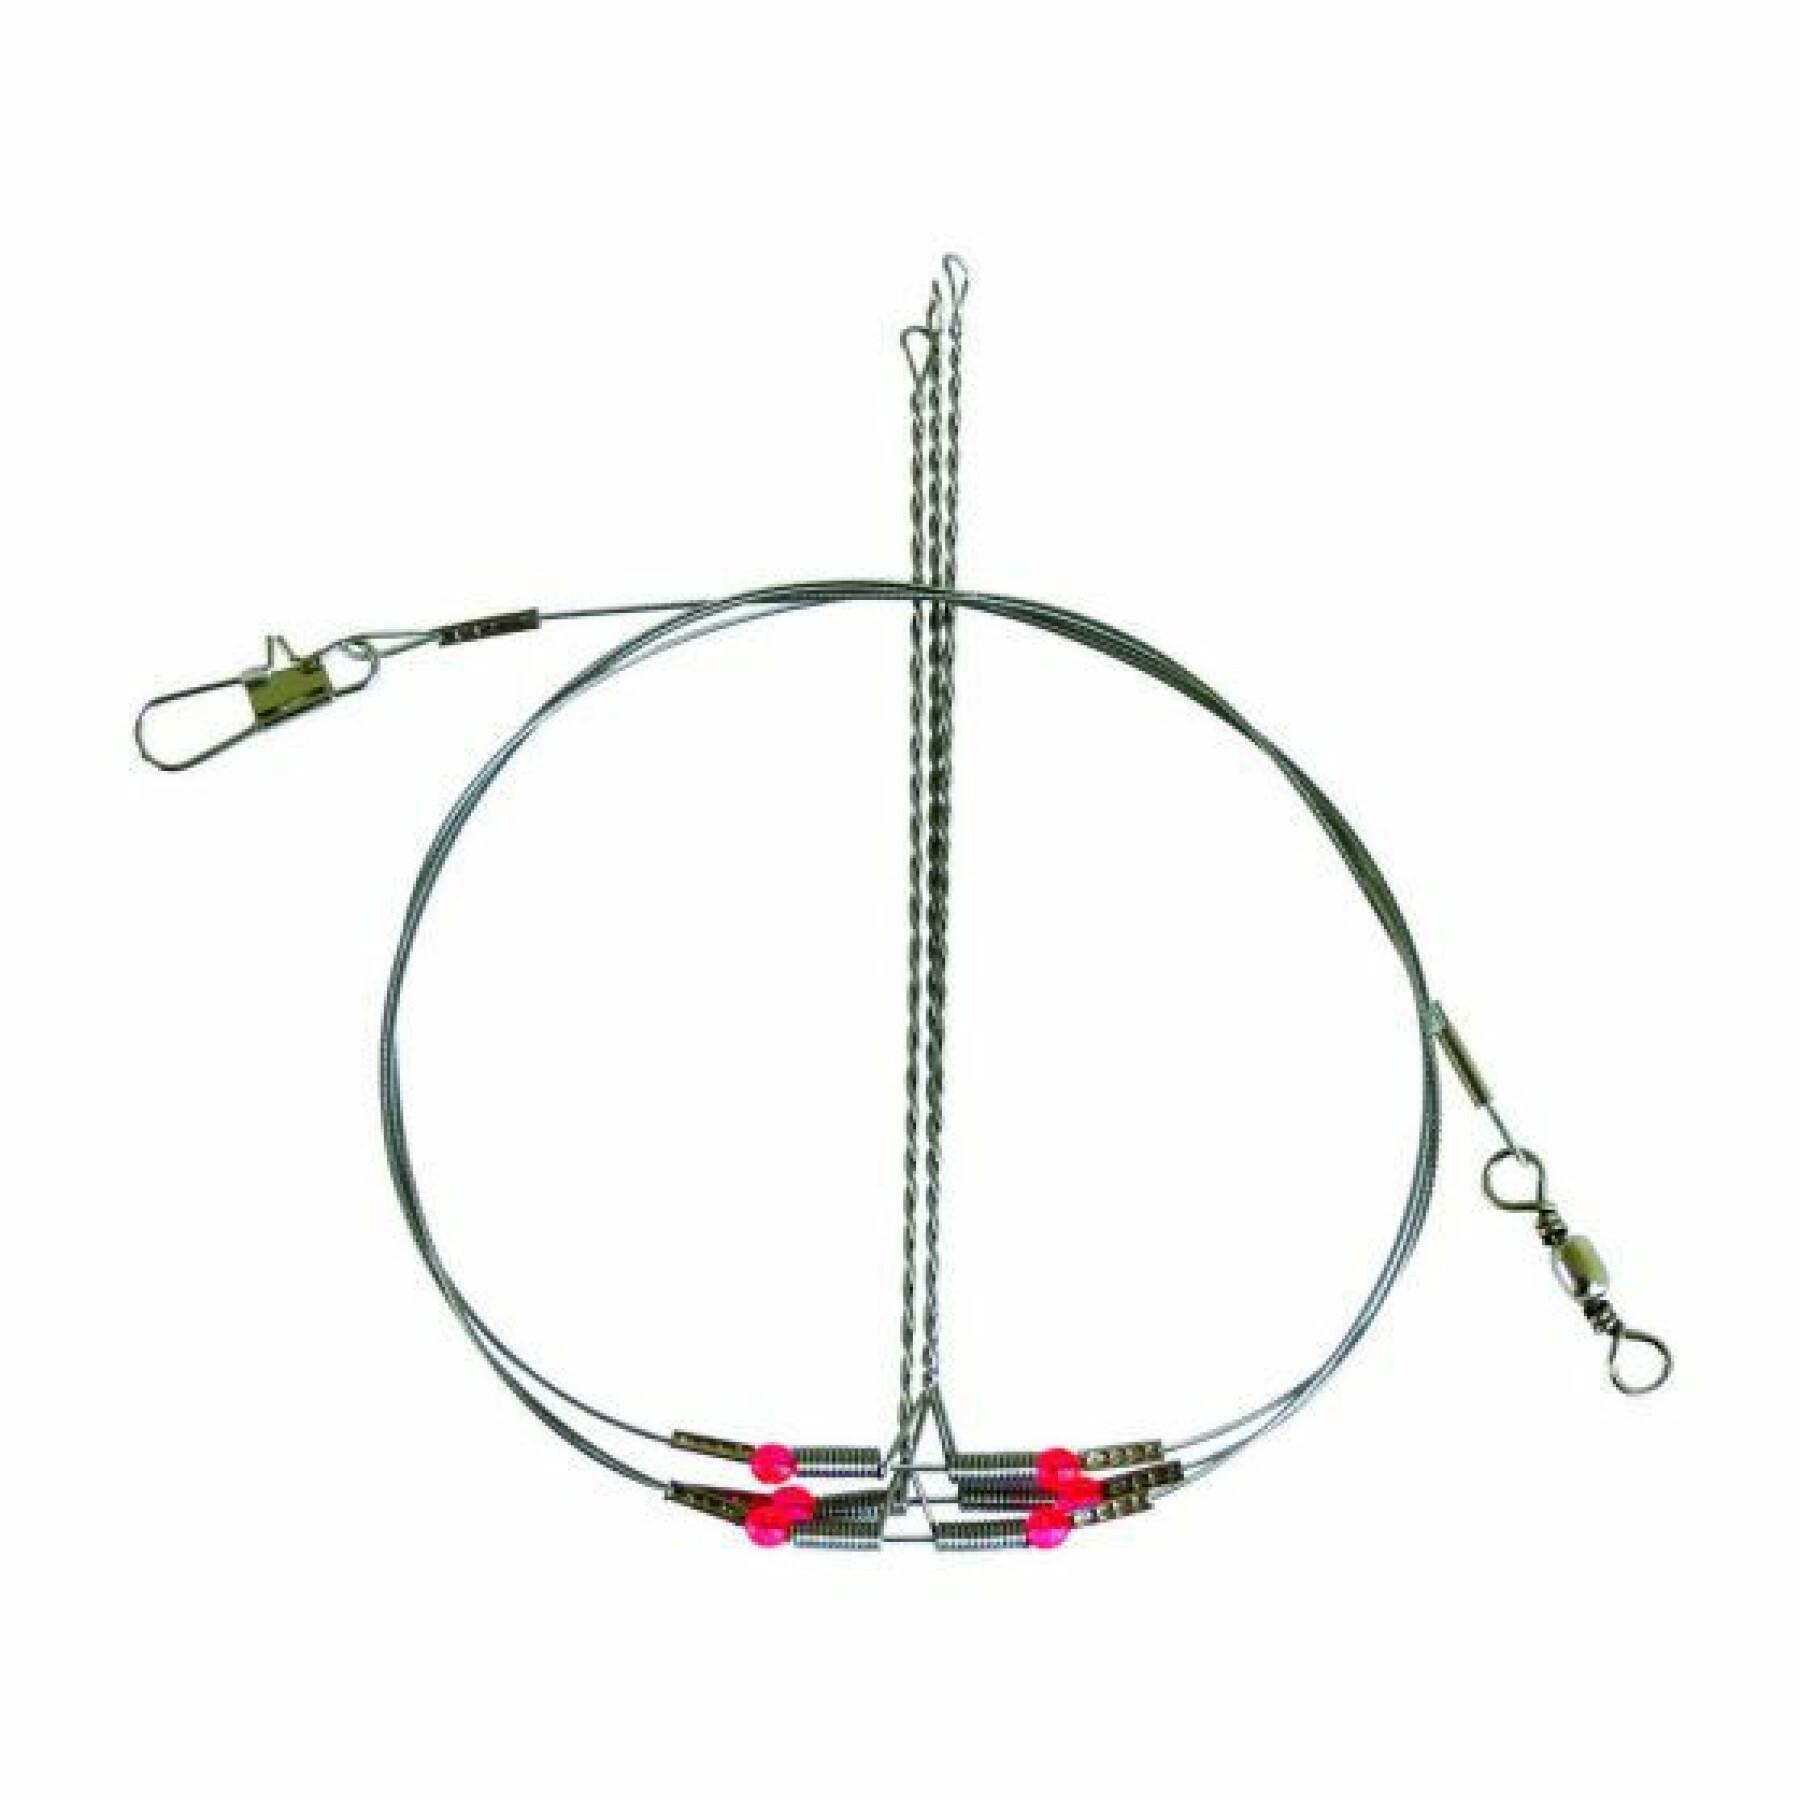 Line leader 3 steel clips Ragot 1,5 m 60lbs